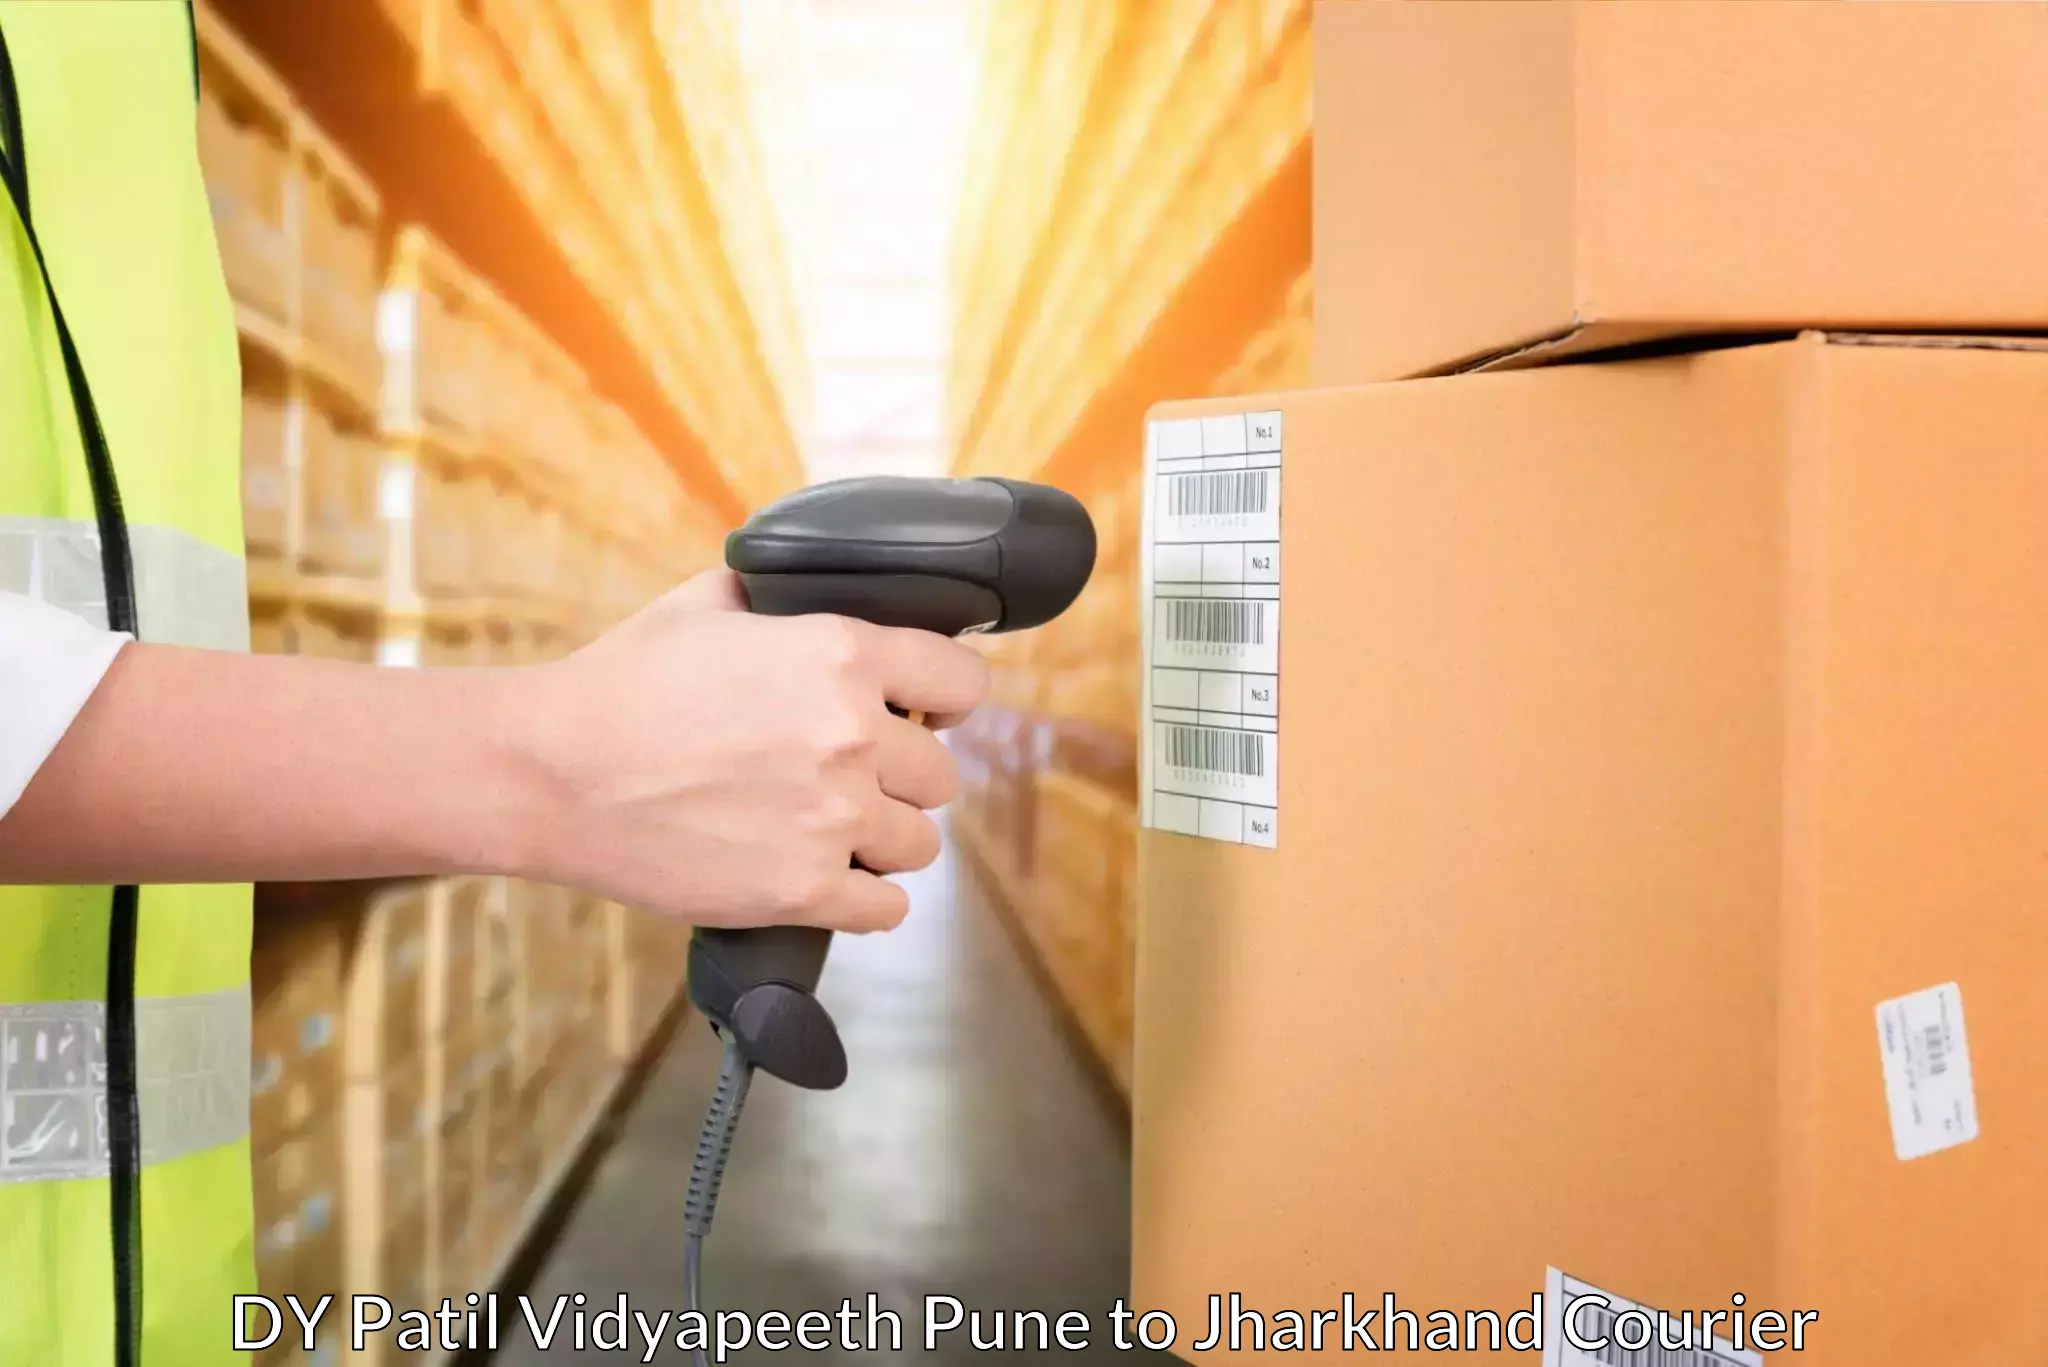 Business shipping needs DY Patil Vidyapeeth Pune to Tandwa